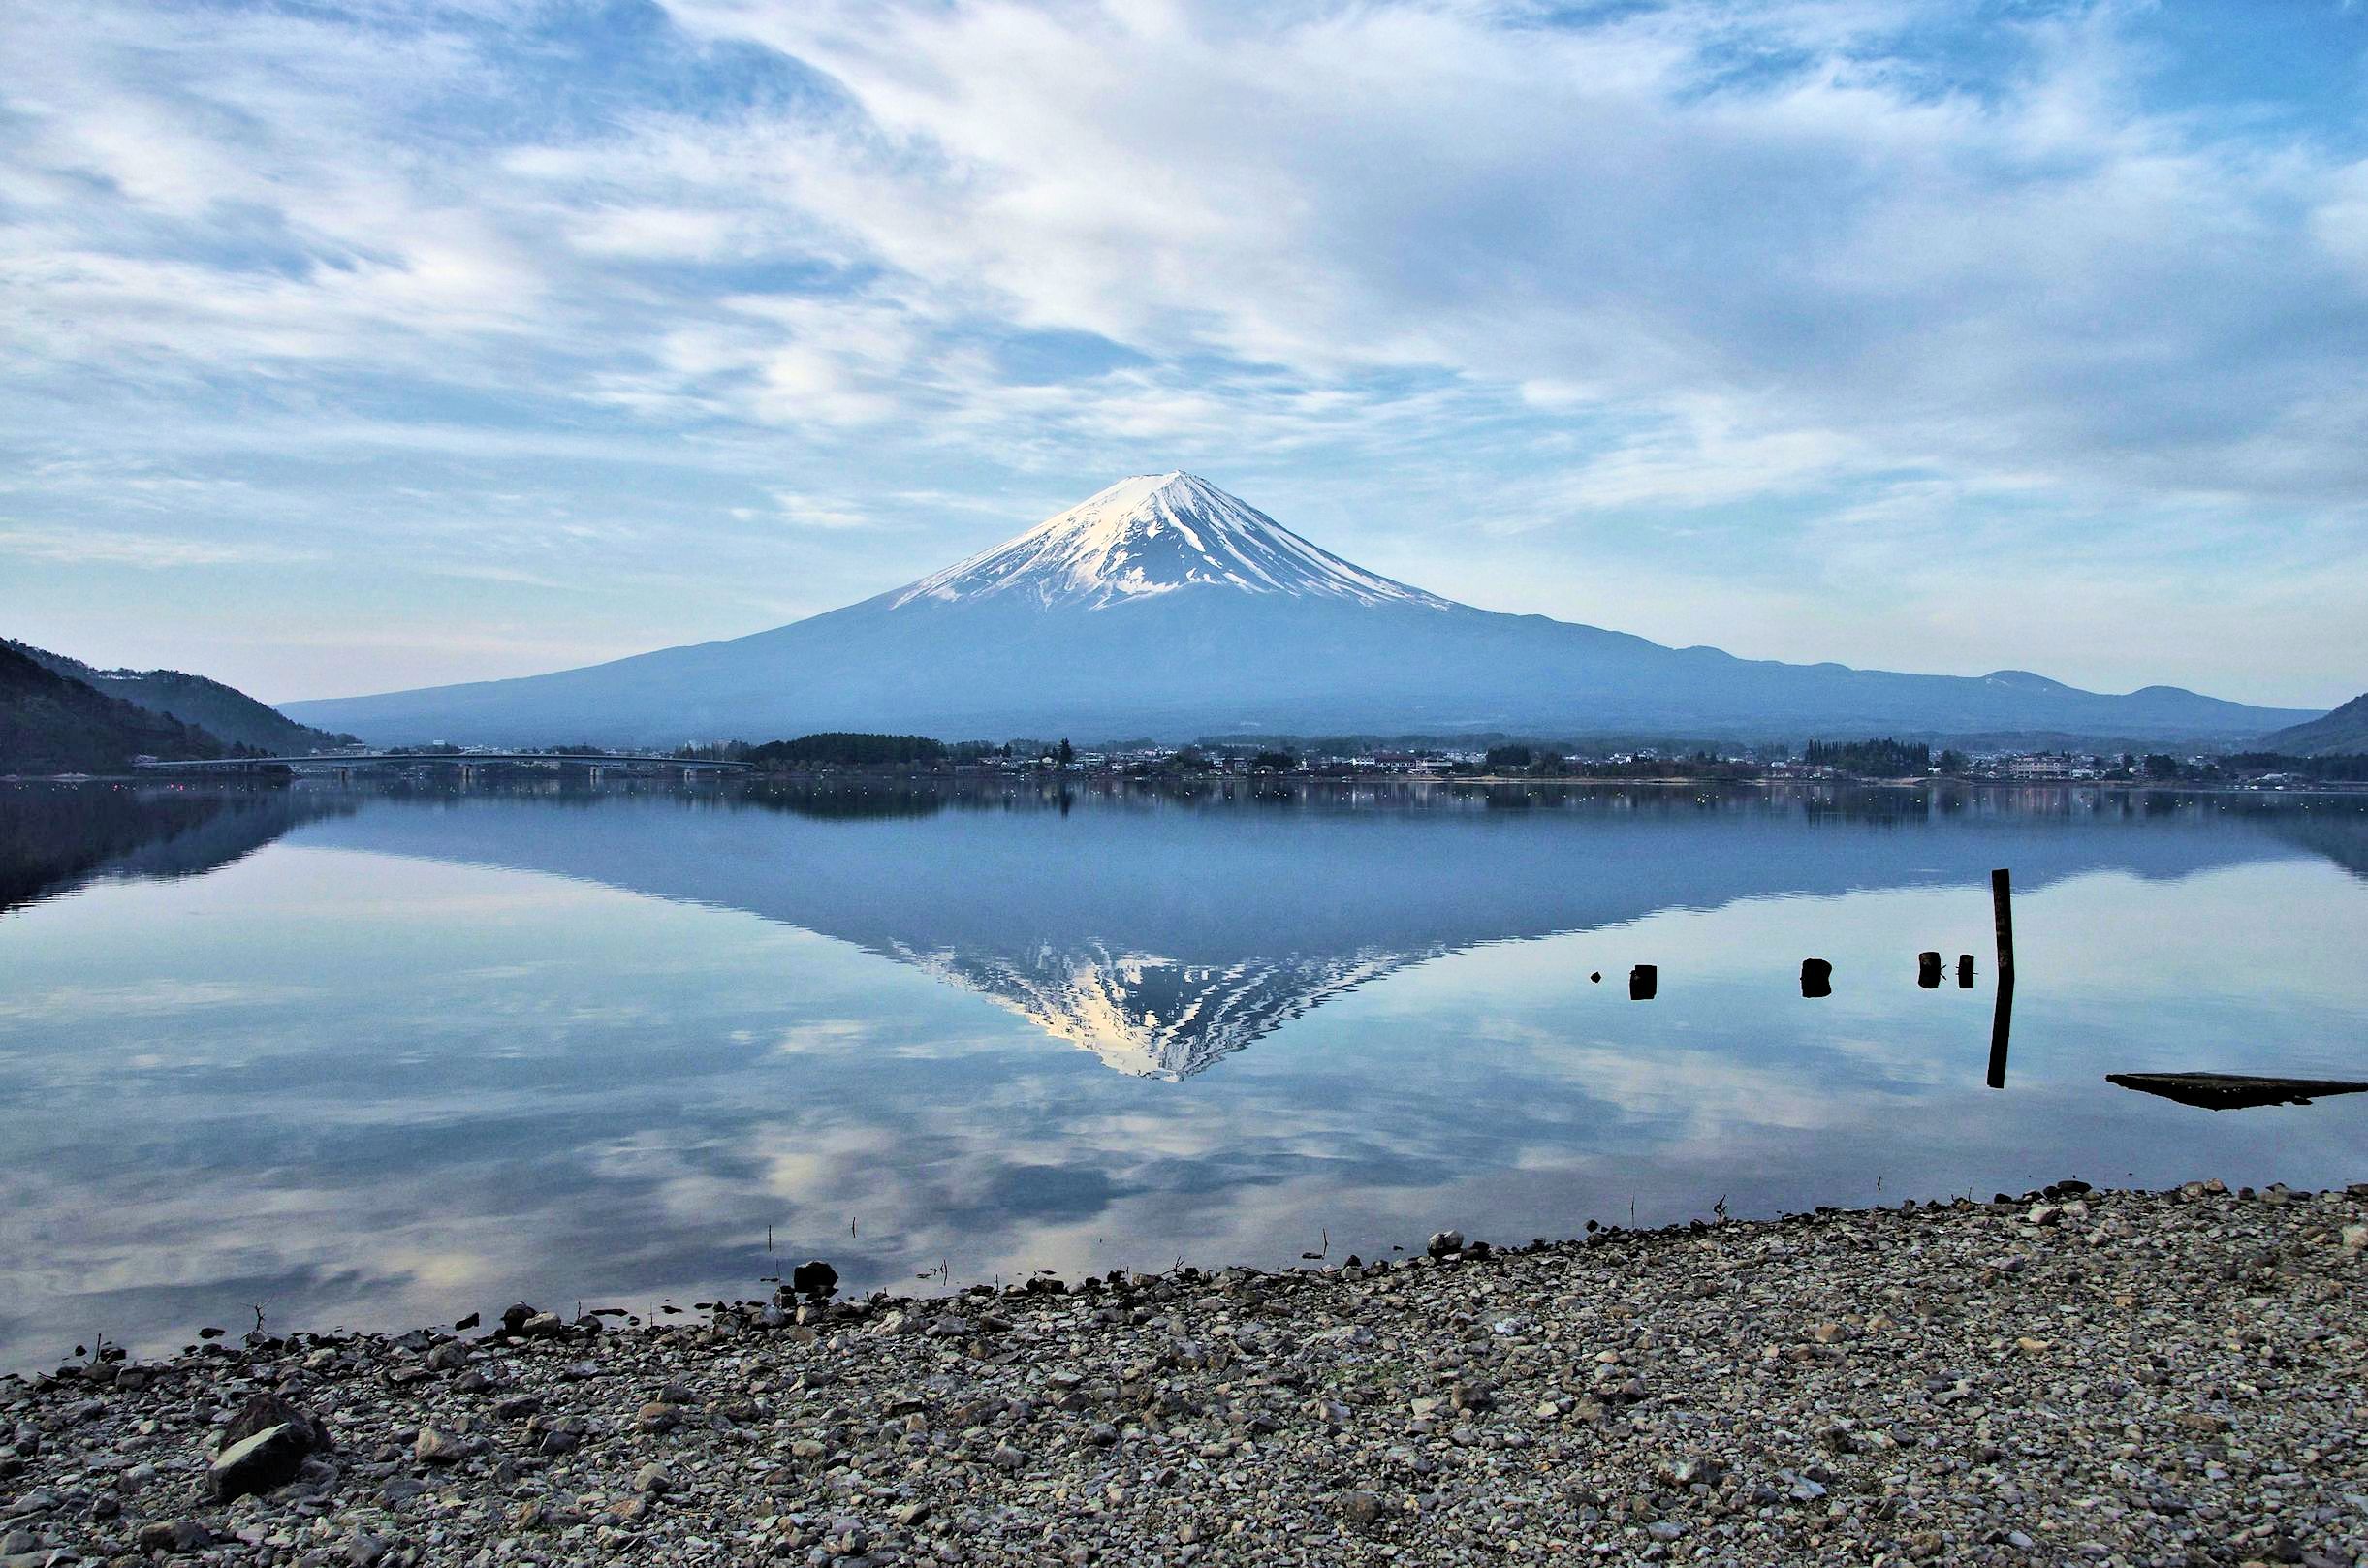 Inverse Mt. Fuji or Mt. Fuji mirrored on the lake. North shore of Lake Kawaguchi (2015-04-24). 逆さ富士。河口湖北岸